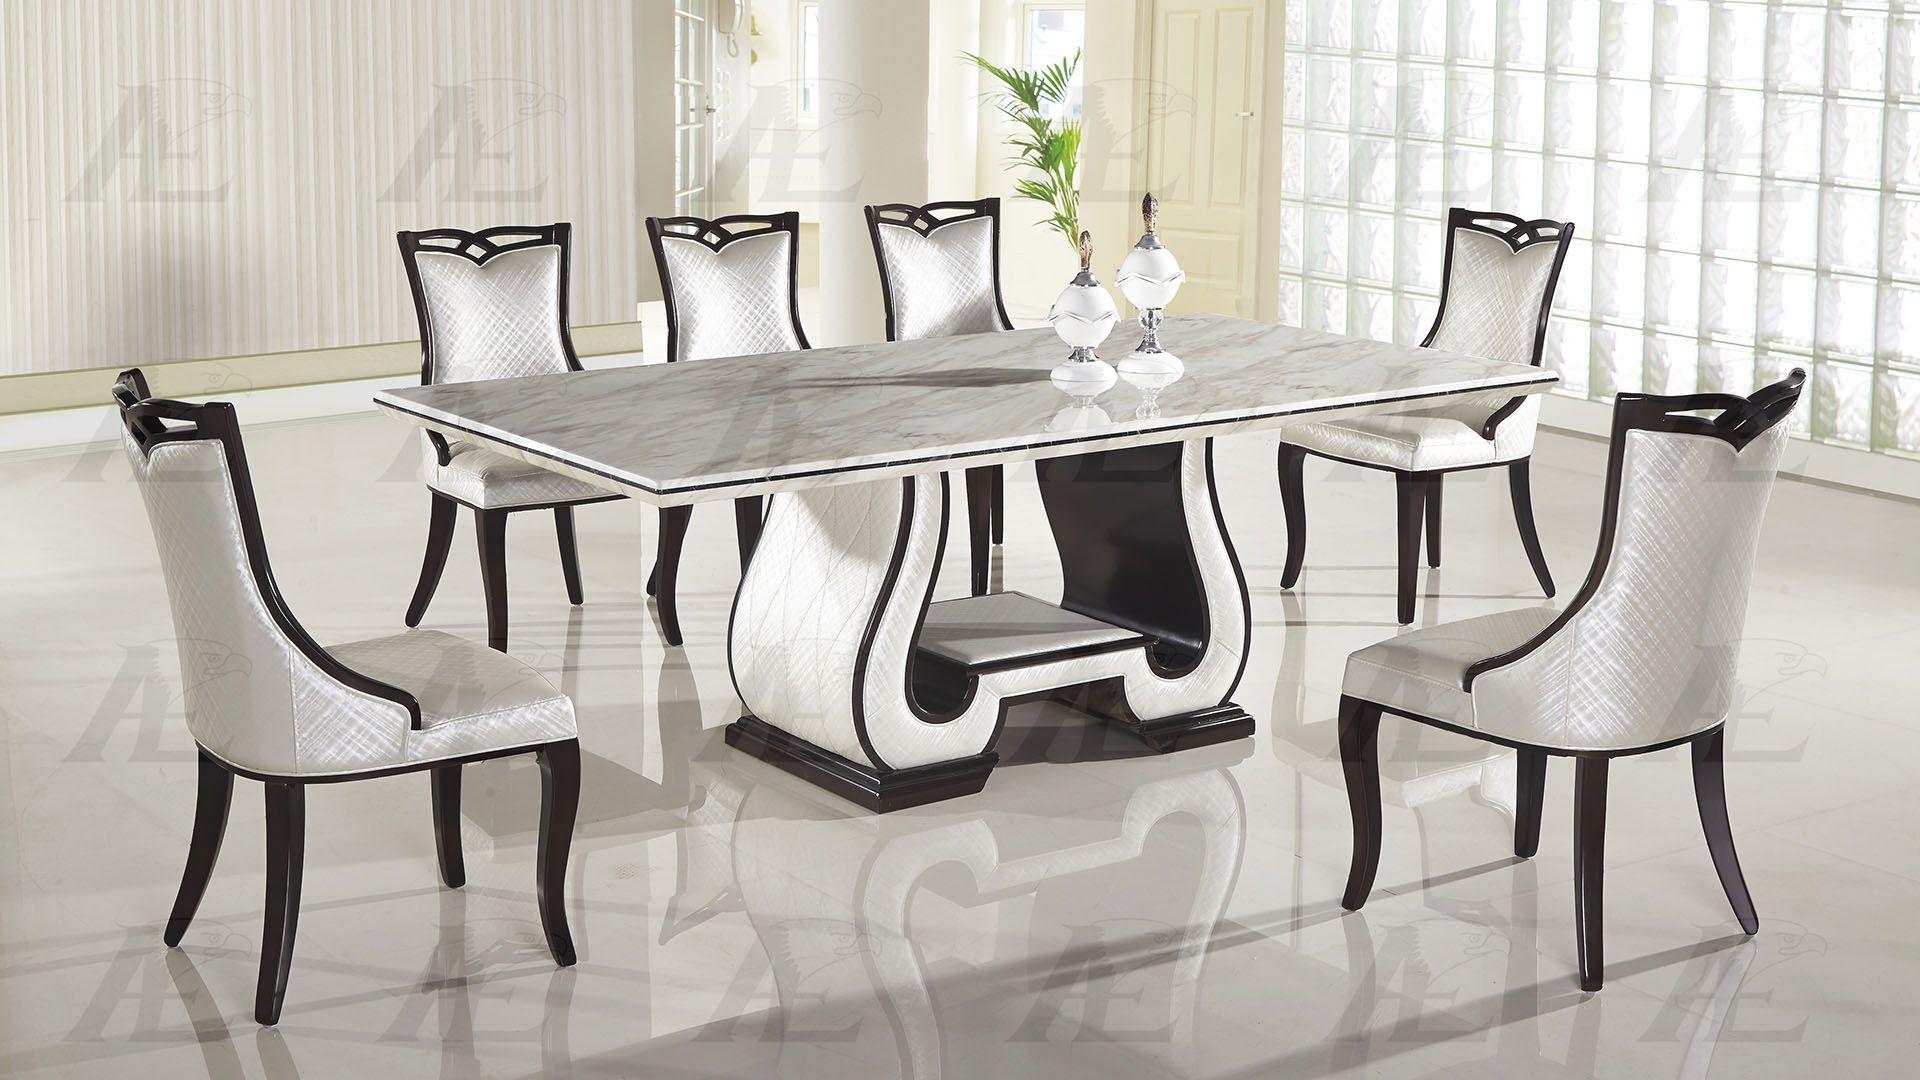 

    
American Eagle Furniture DT-H901 Dining Table White/Black DT-H901
